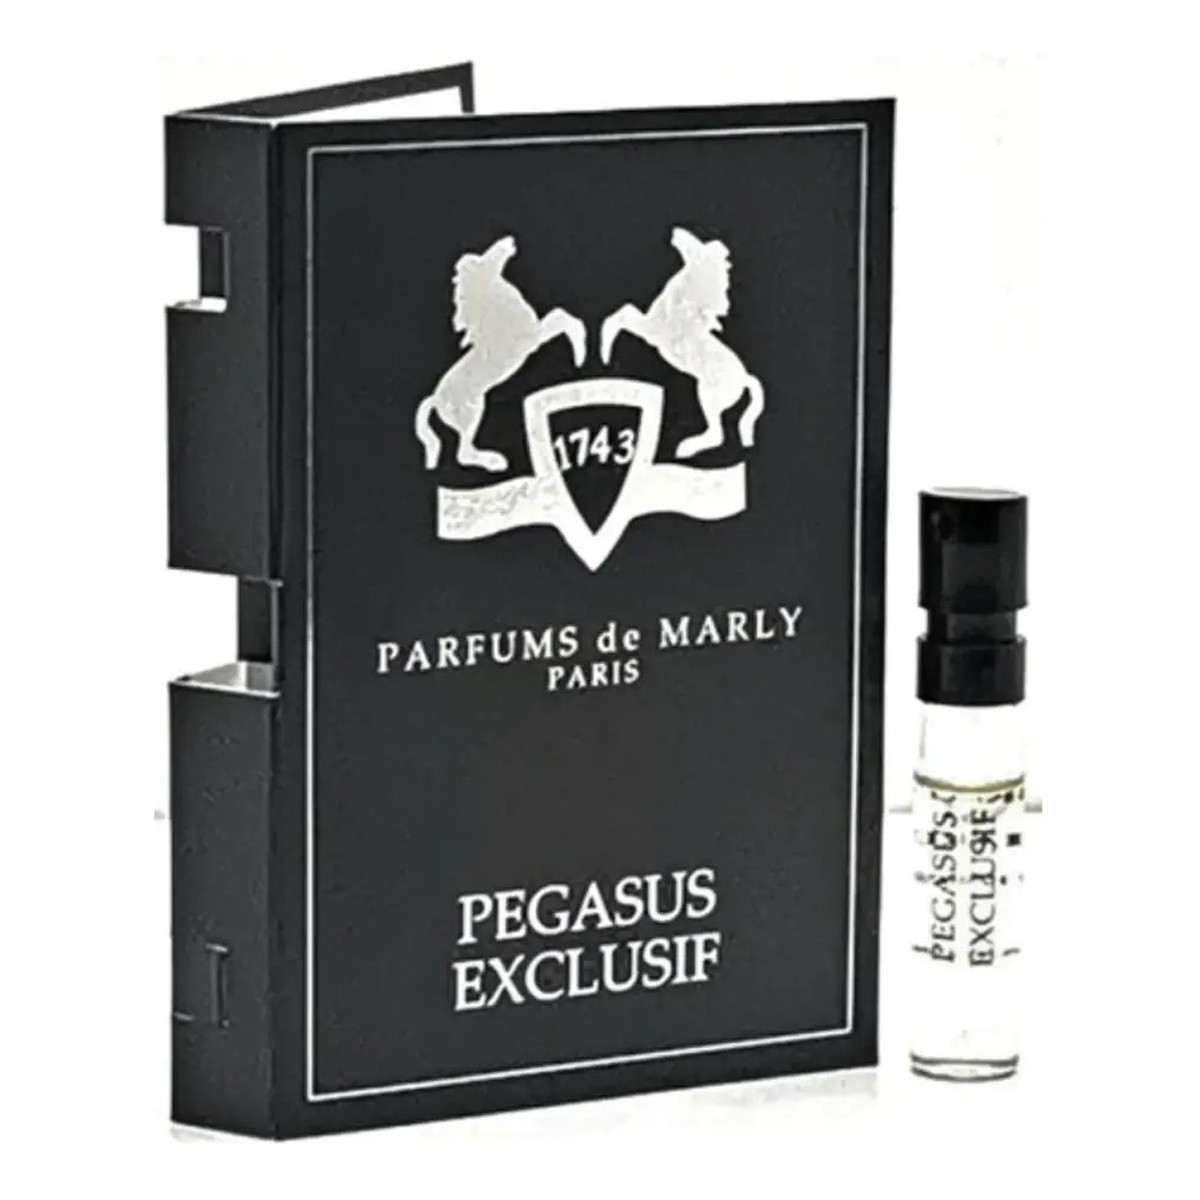 Parfums de Marly Pegasus Exclusif Perfumy spray próbka 1.5ml